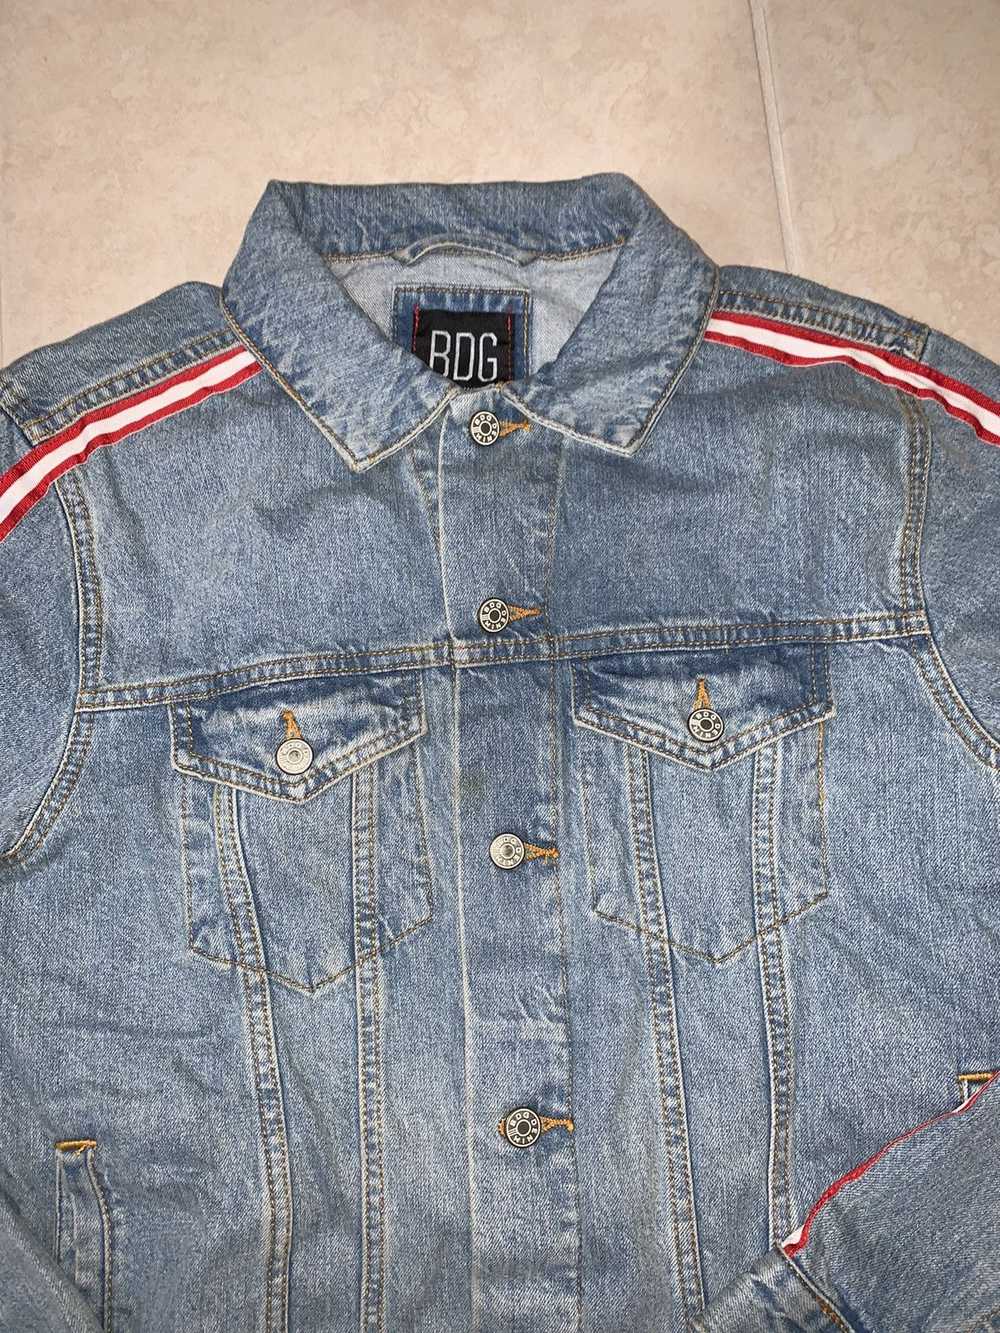 Bdg × Urban Outfitters BDG Pinstripe Denim Jacket - image 2